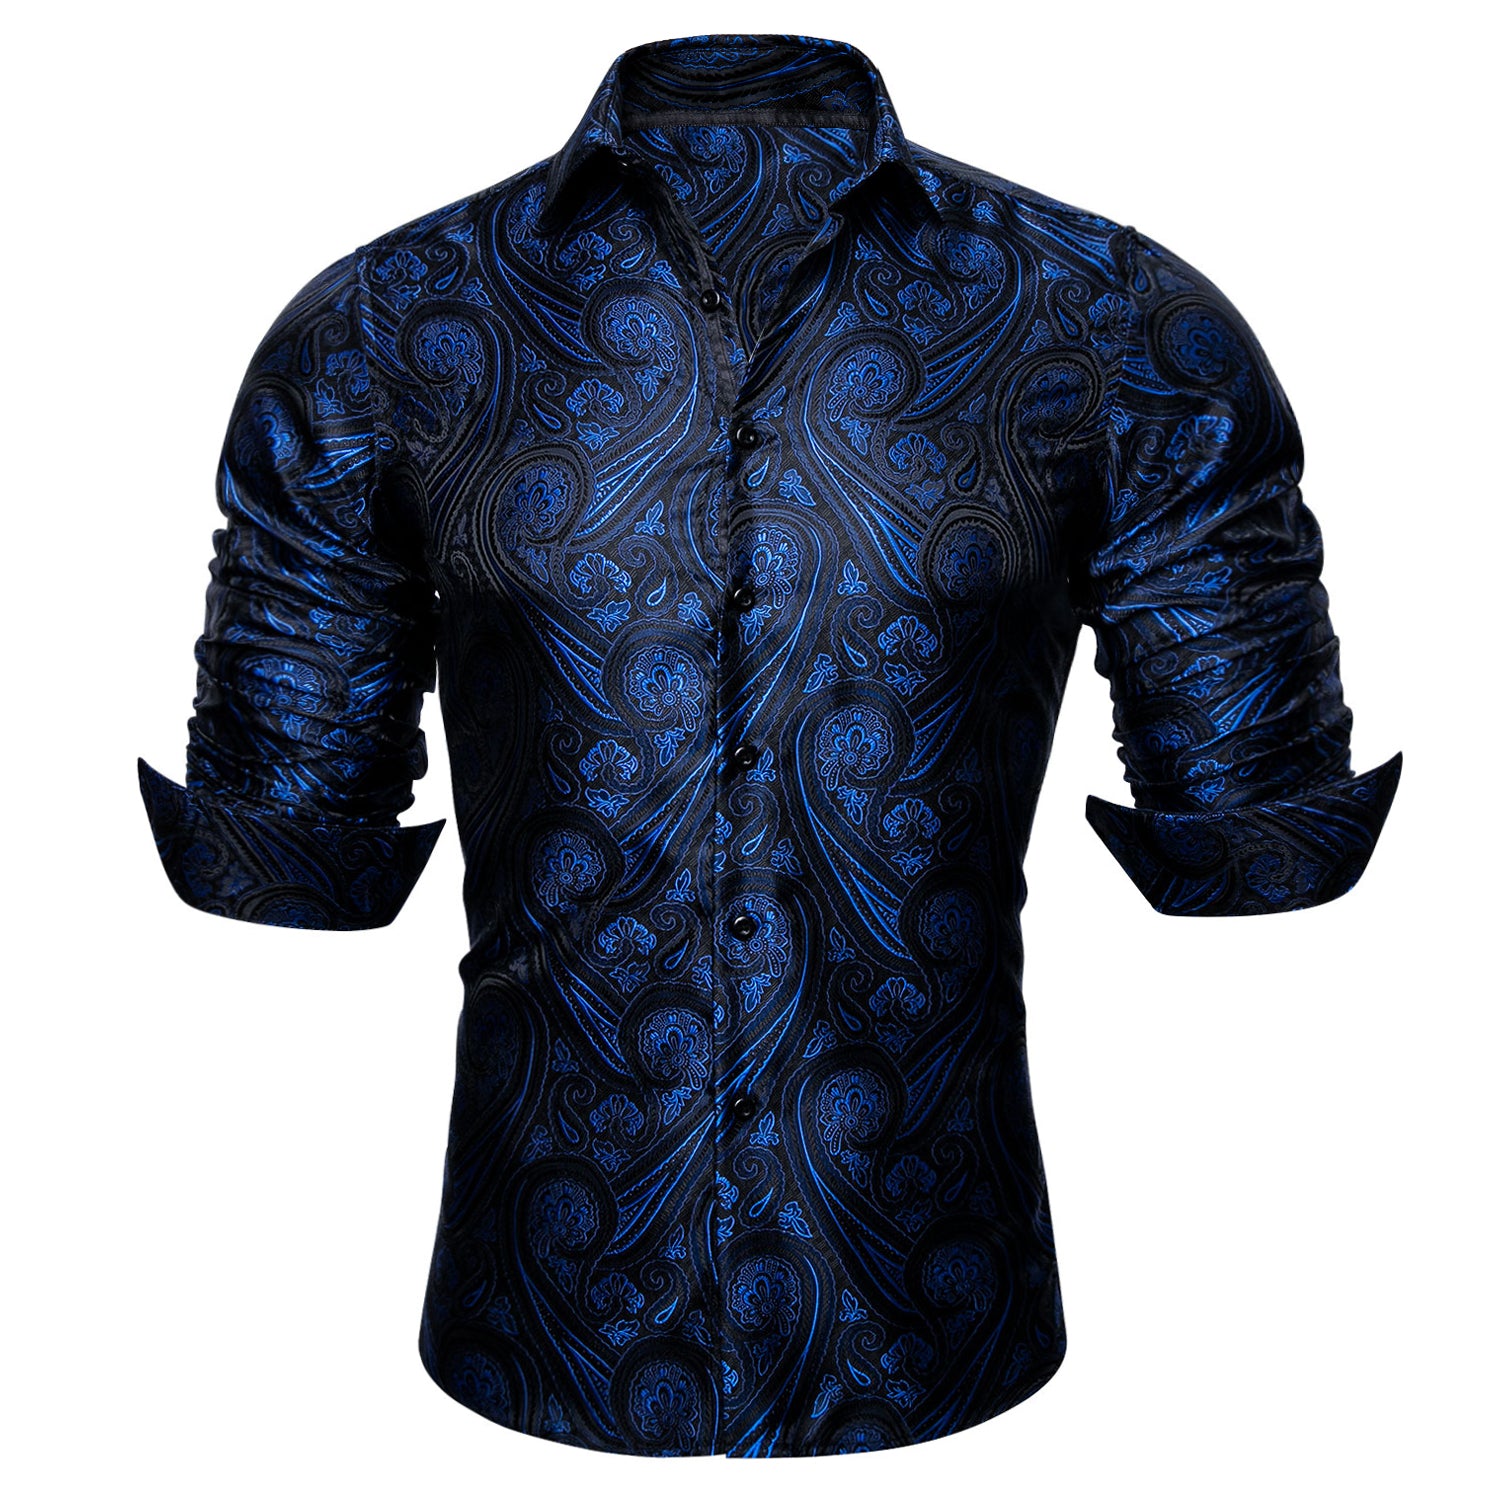 Barry.wang New Blue Paisley Silk Tribal Long Sleeve Daily Plus Size Men's Shirt